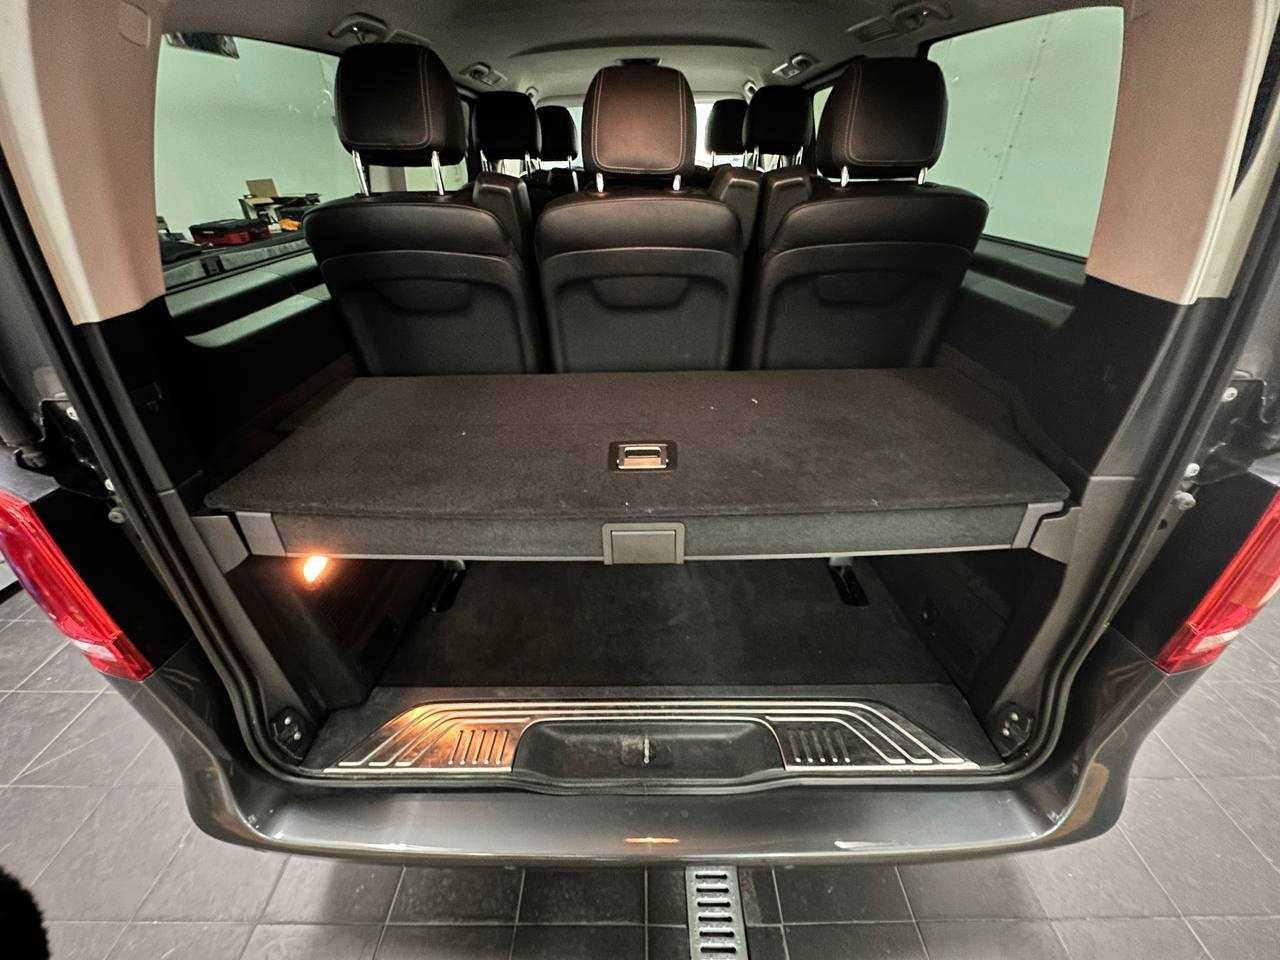 Suporte Mala - Mercedes V classe - Compartimento de carga